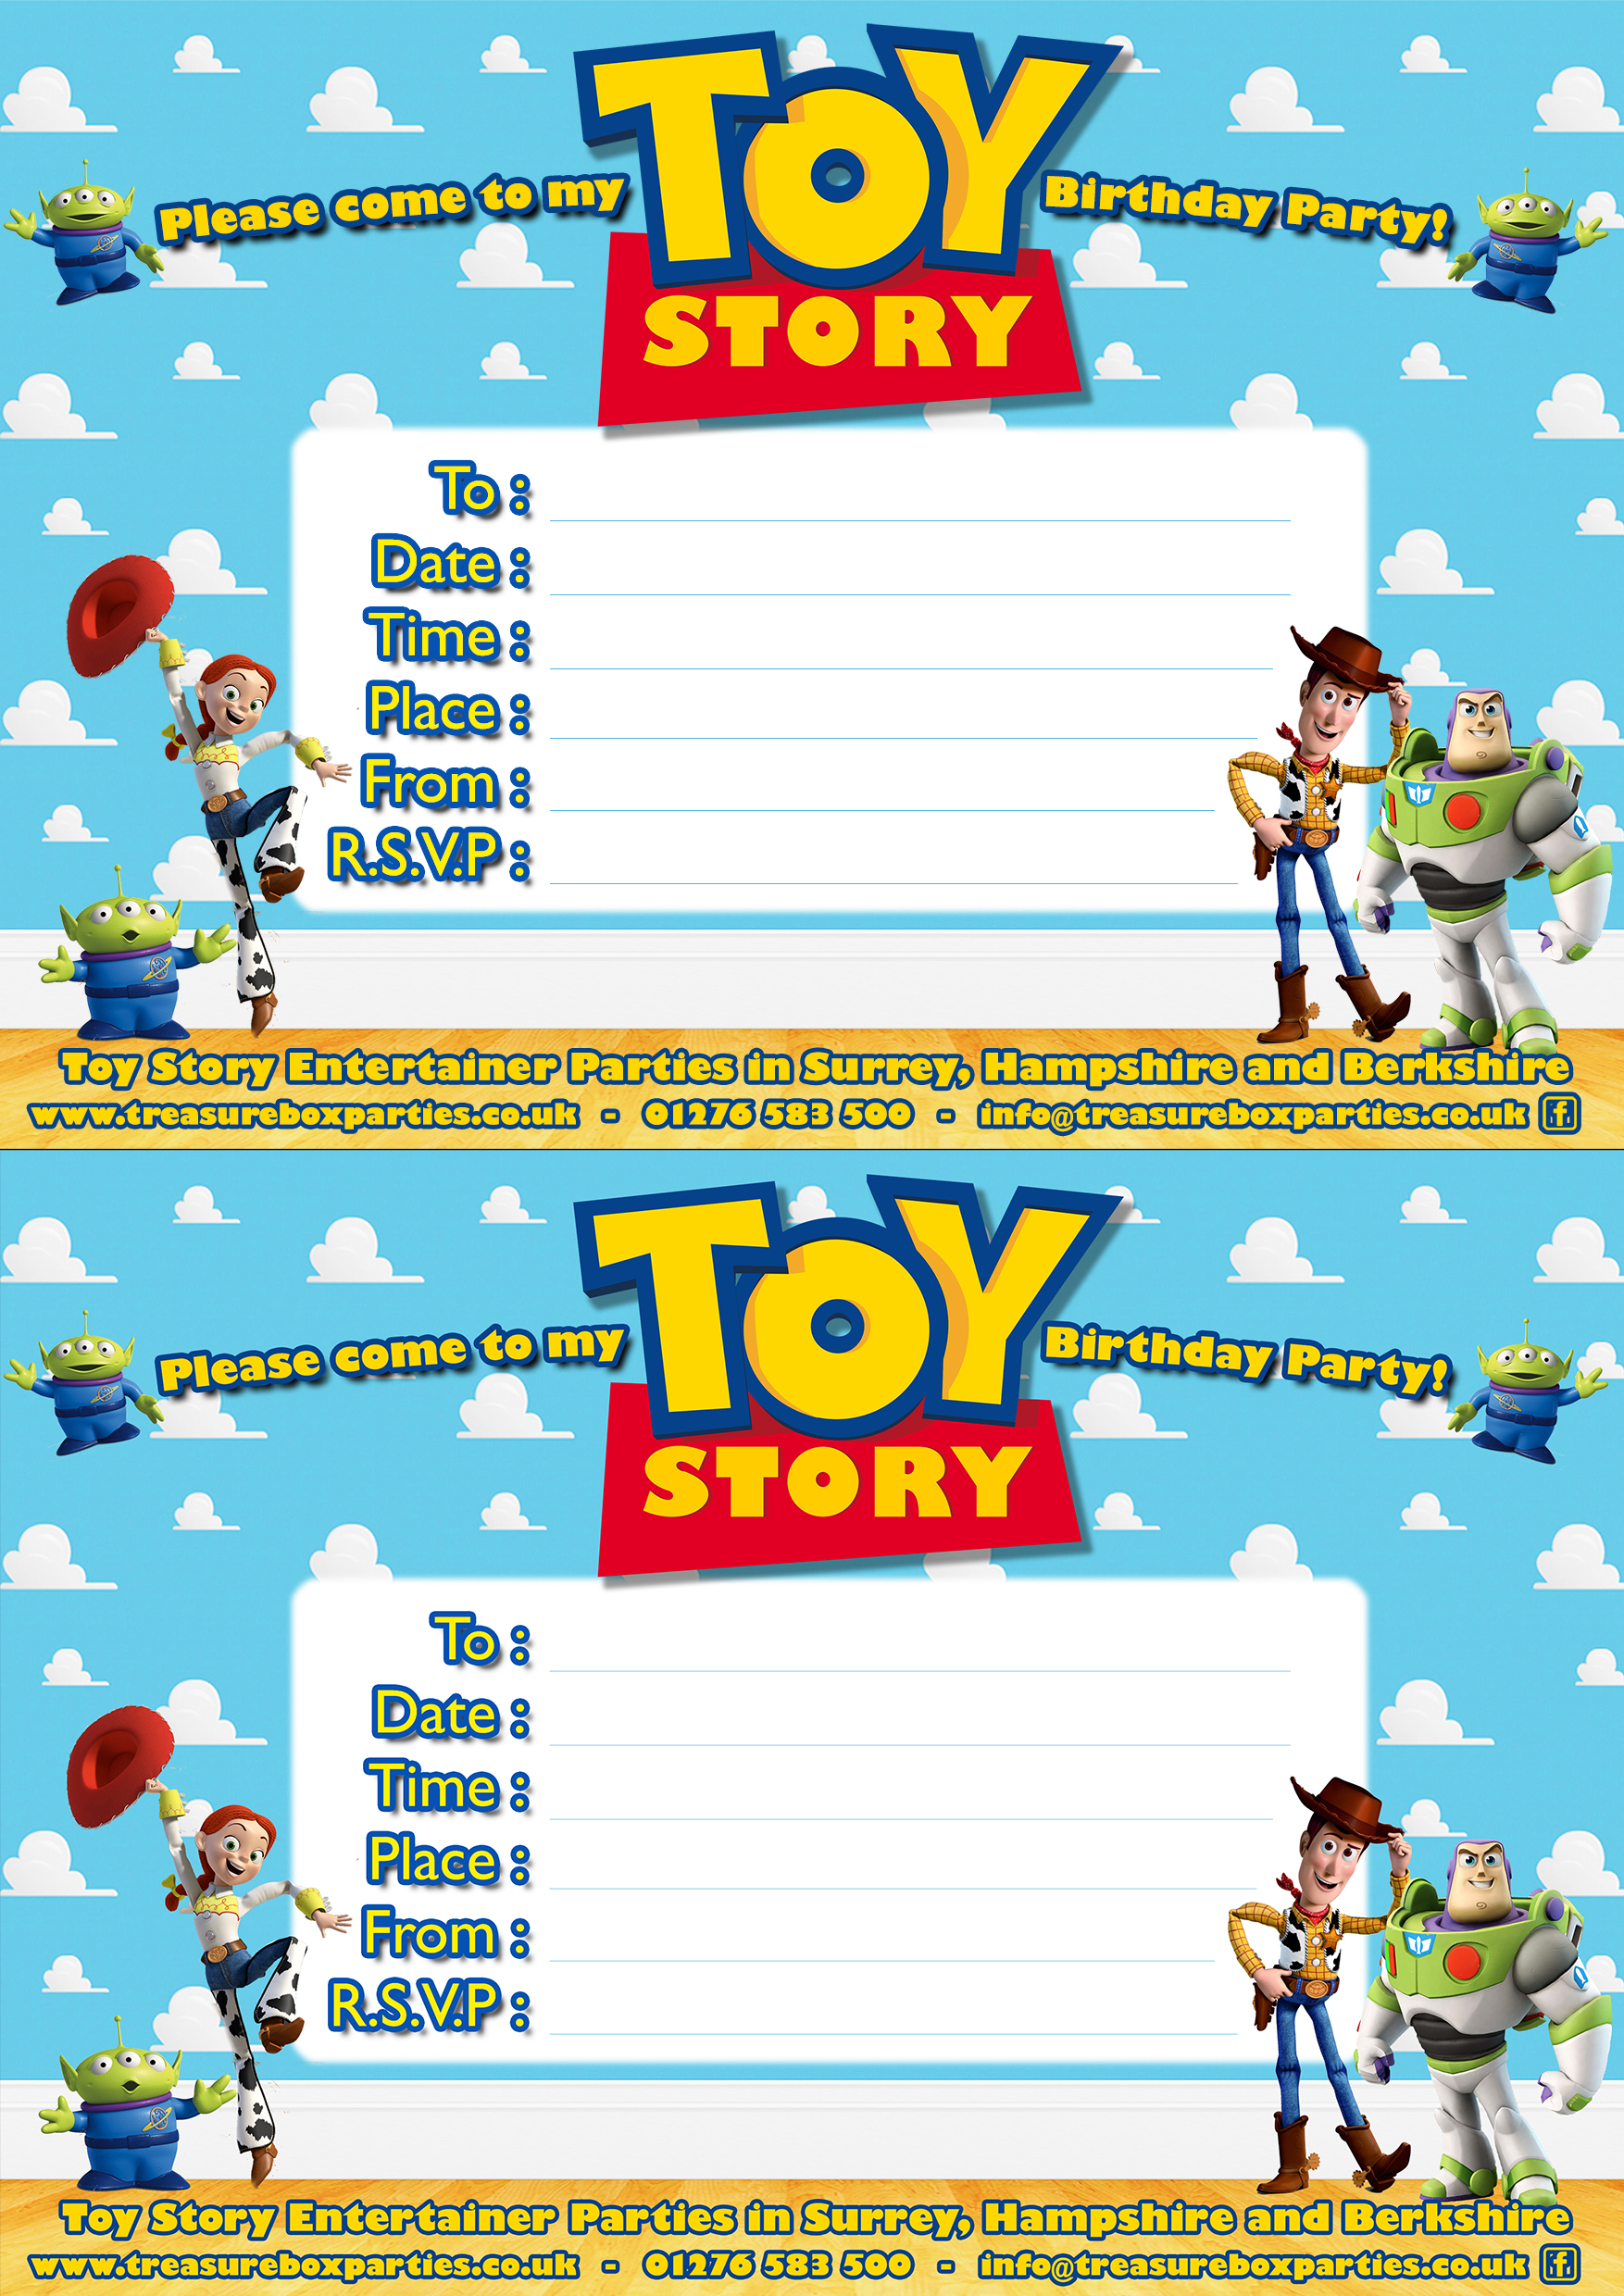 Toy Story Downloads Childrens Entertainer Parties Surrey Berkshire Hampshire Treasure Box Parties Supplies Kids Party Games Ideas